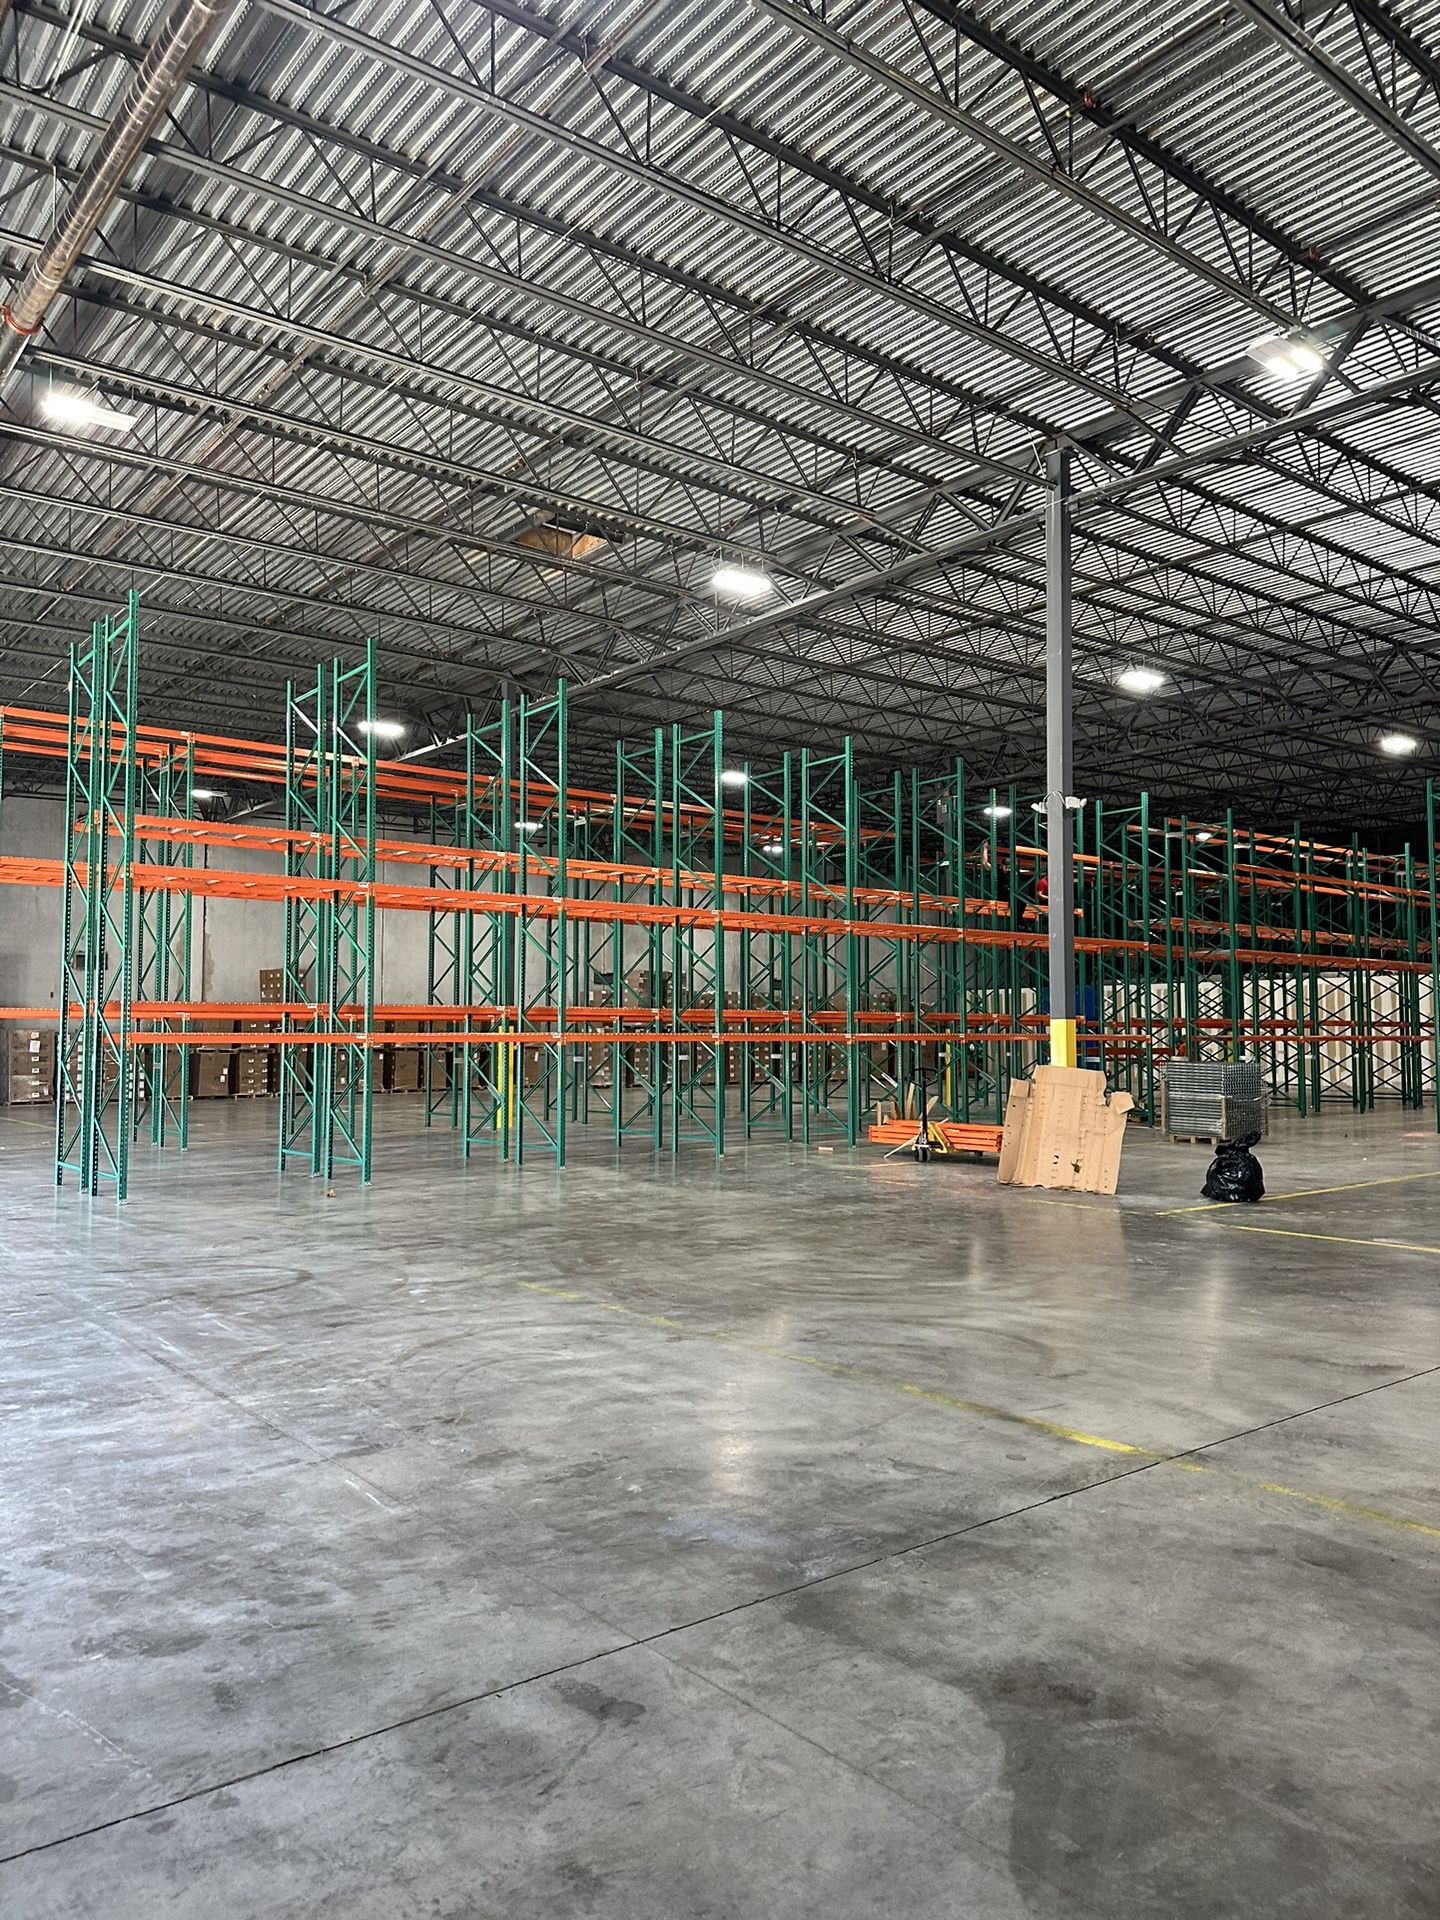 Pallet Racks Upright Beams Wire Decks Warehouse 